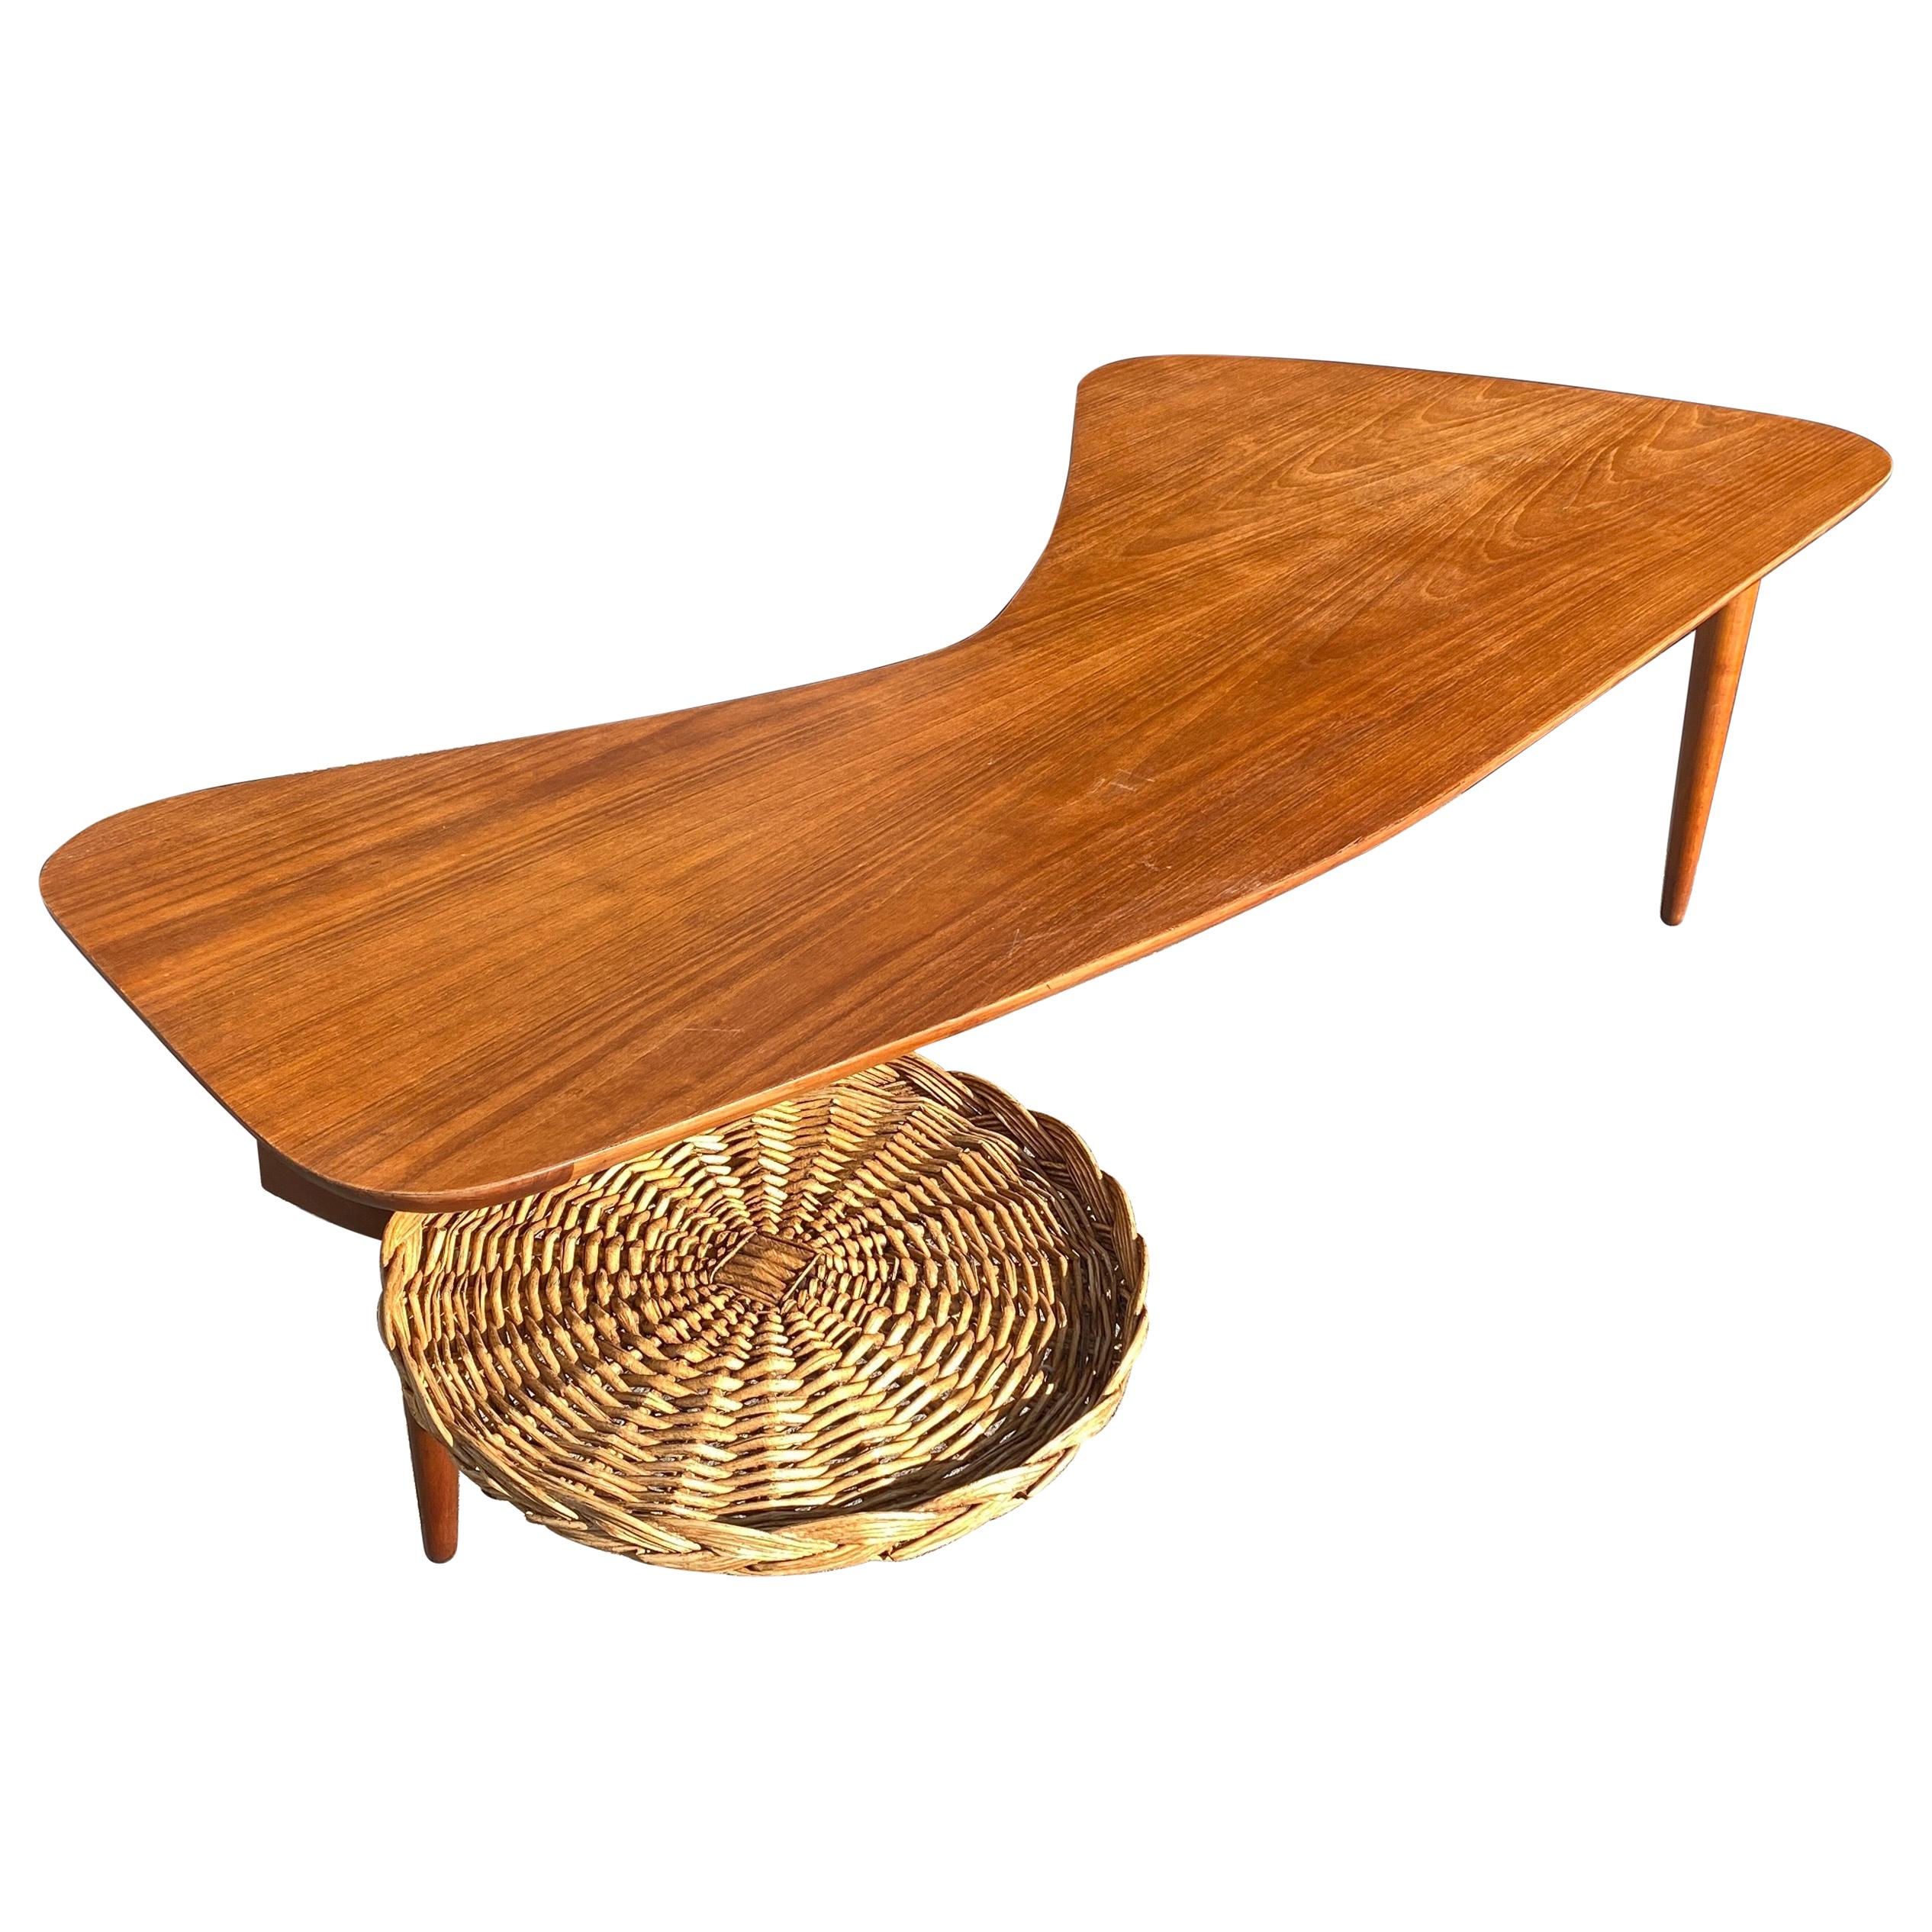 Shaped Maple Table Designed by Taichiro Nakai for La Permanente Cantù, 1950s